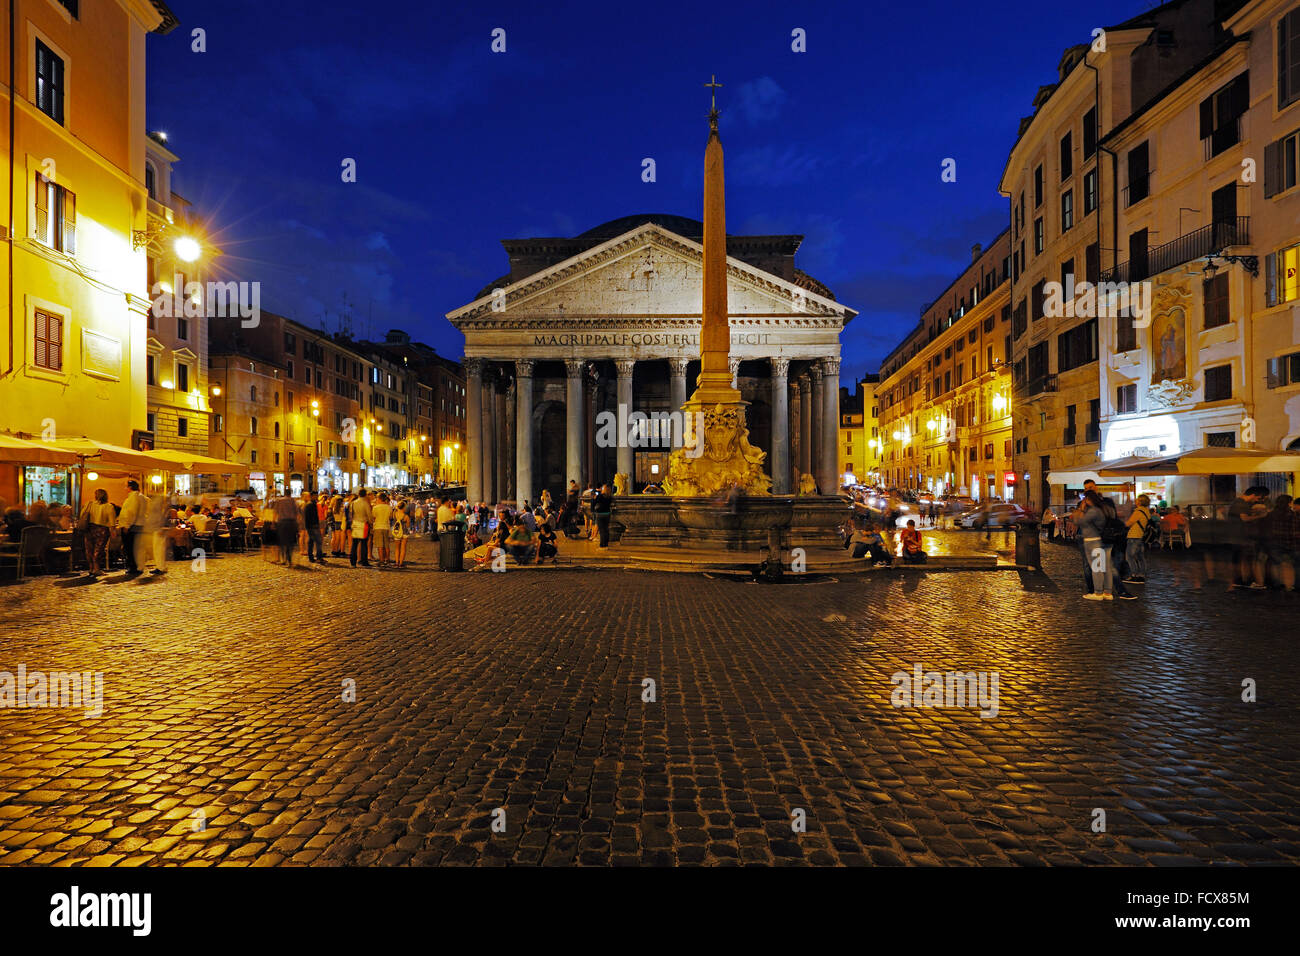 The Pantheon and the Fontana del Pantheon on Piazza della Rotonda, Rome, Italy Stock Photo